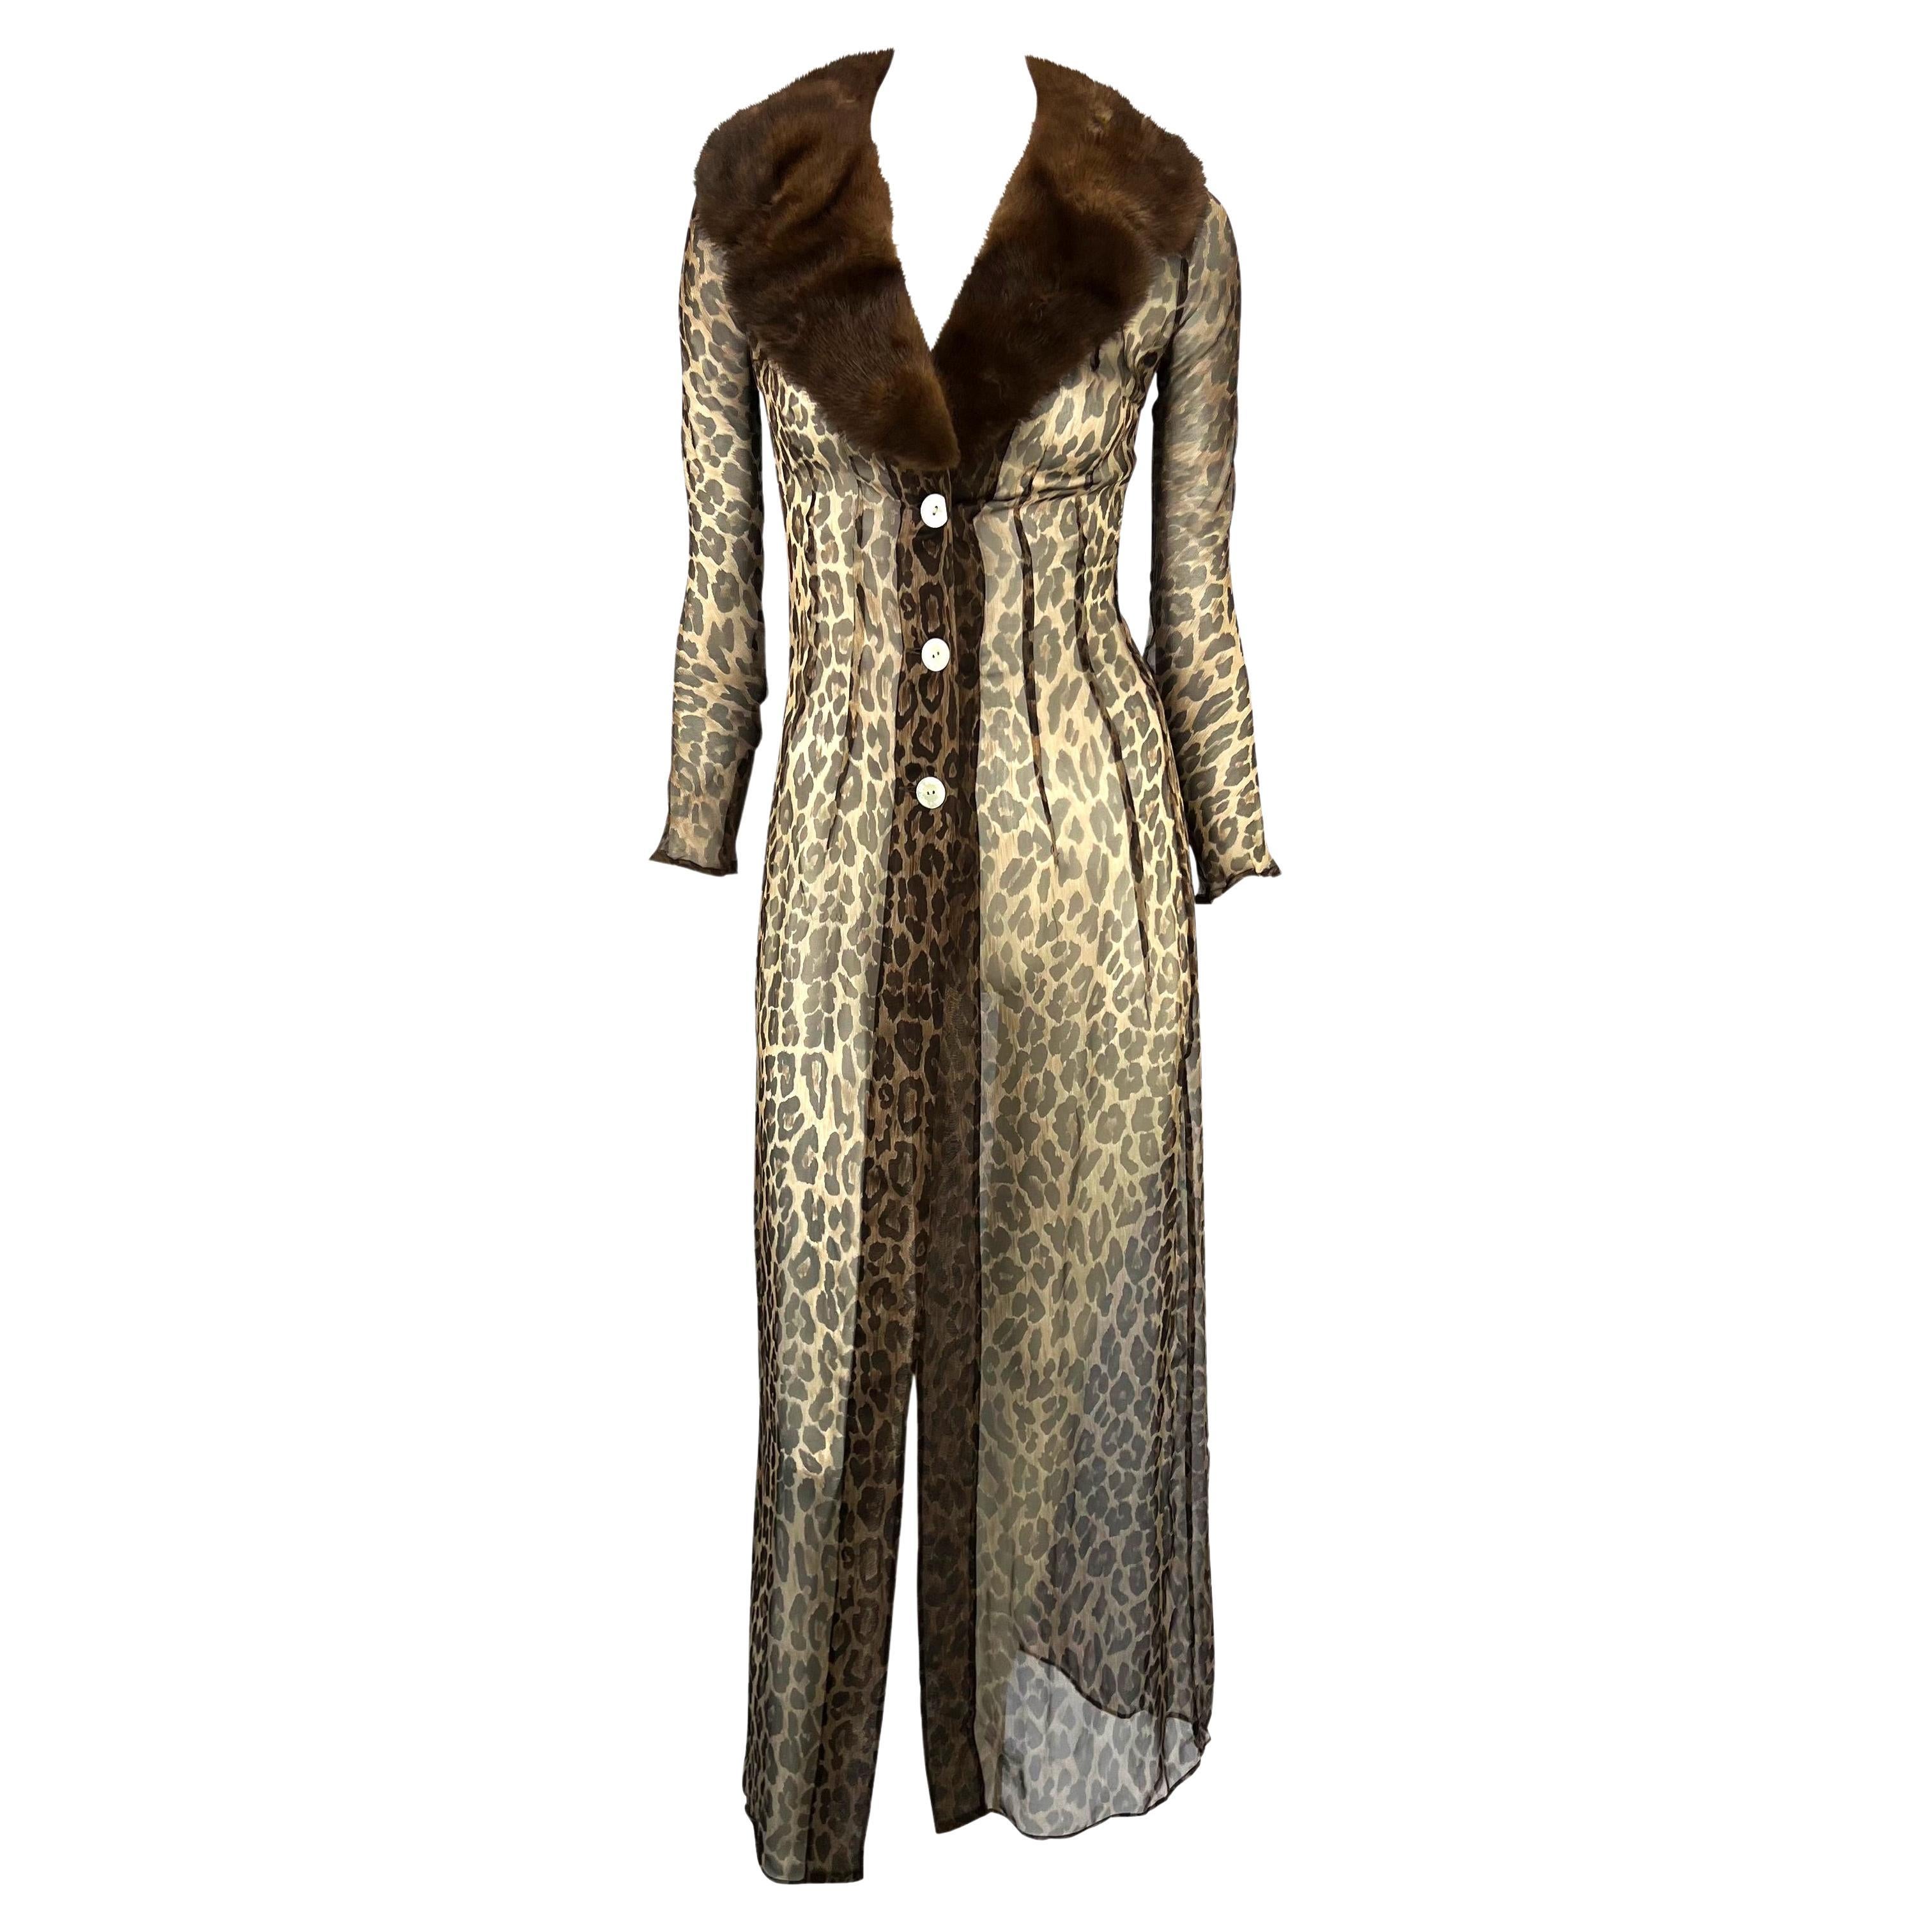 S/S 1997 Dolce & Gabbana Sheer Cheetah Print Full-Length Cardigan Dress Fur